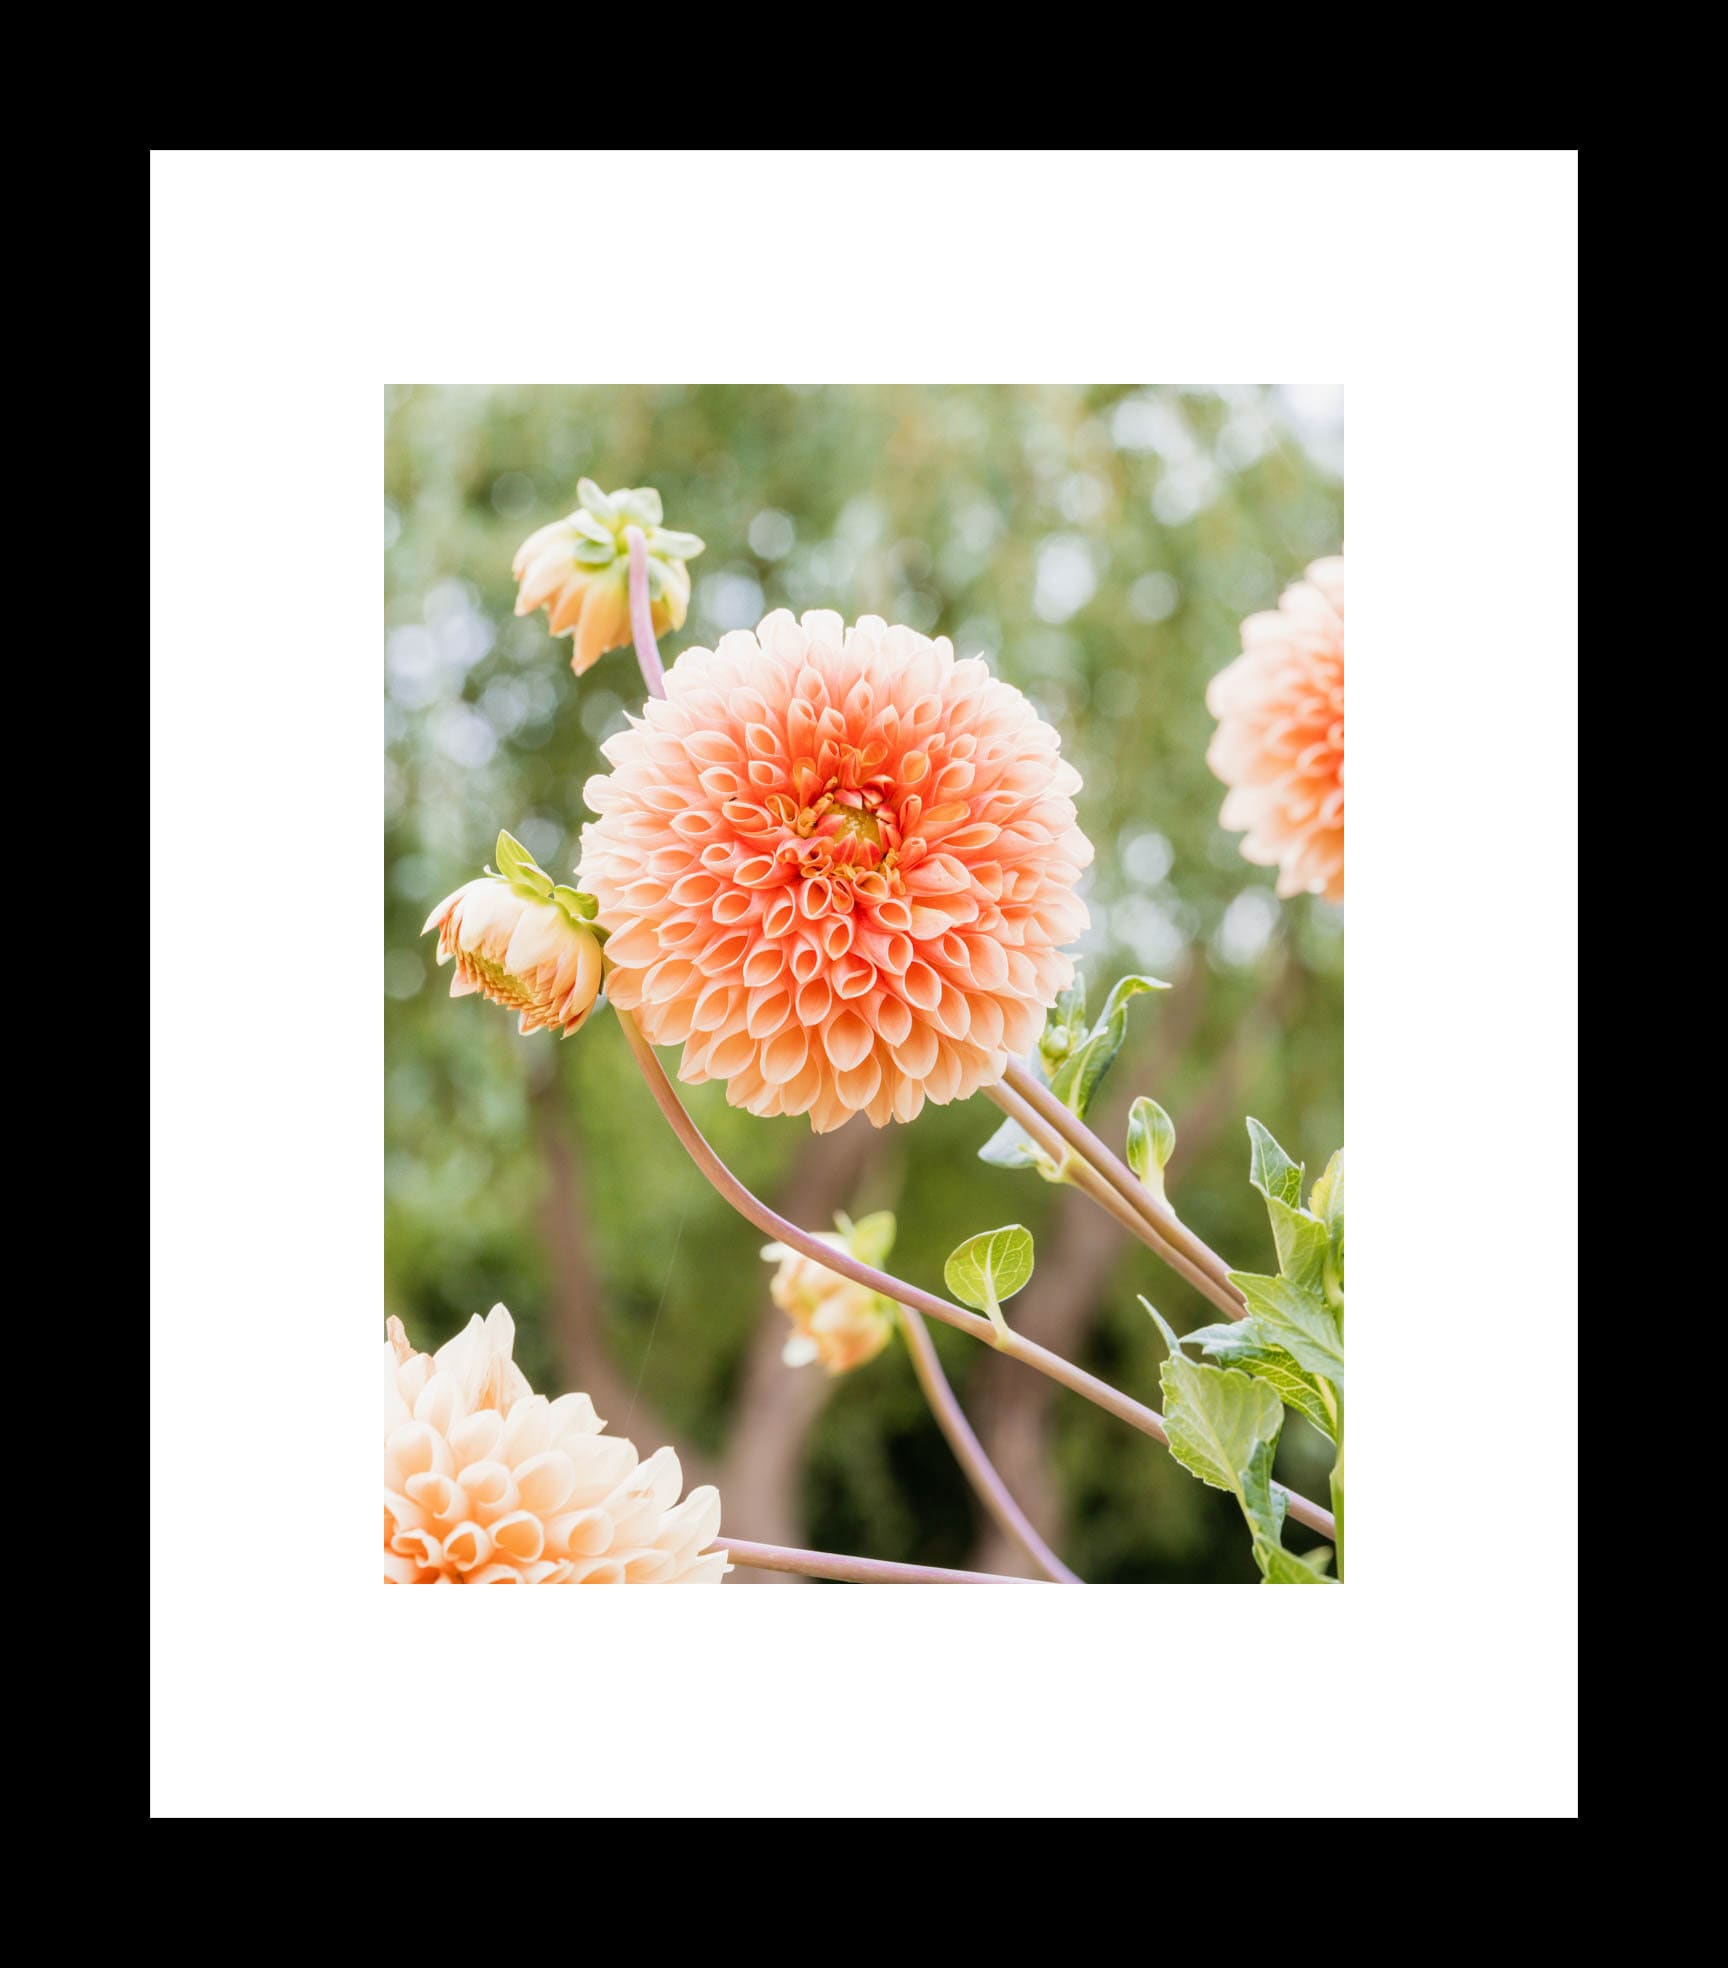 Orange Dahlia Flower Photography Print, Botanical Garden Gift, Floral Nature Art Prints, Gallery Wrapped Canvas or Unframed Photograph - eireanneilis